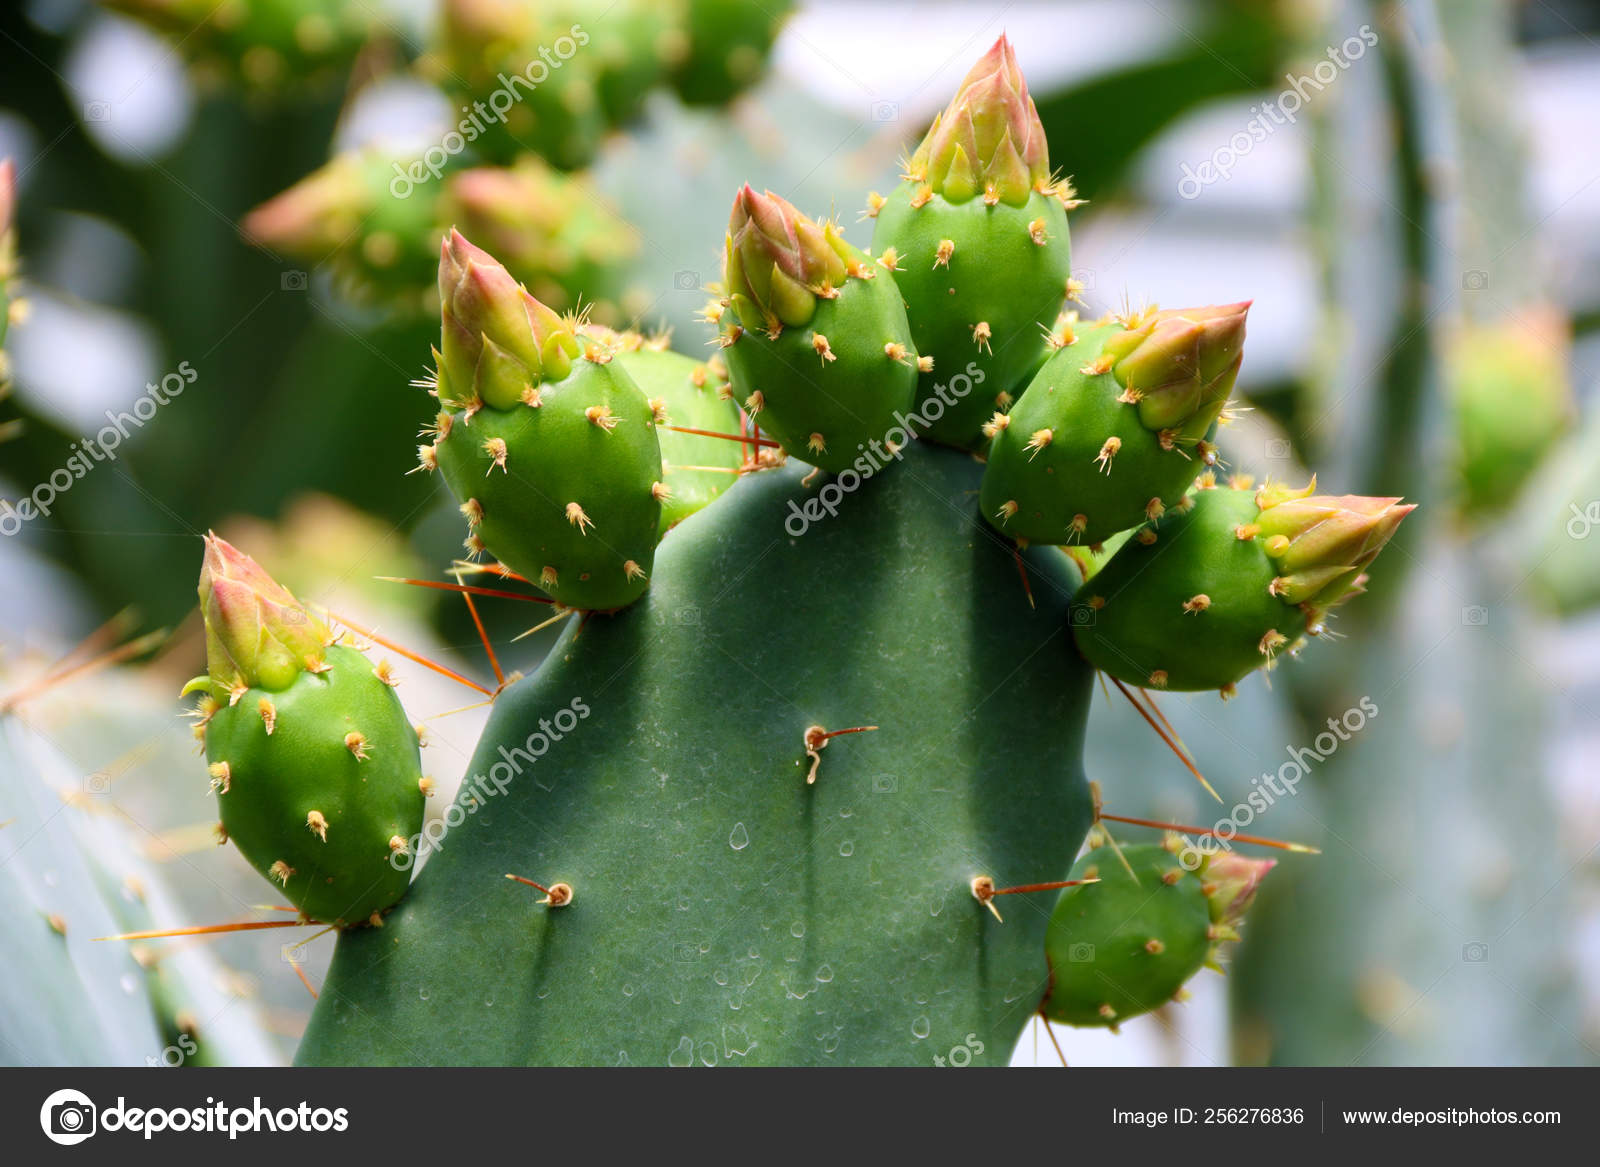 Stockfotos Kaktus mit stacheln Bilder, Stockfotografie Kaktus mit ...